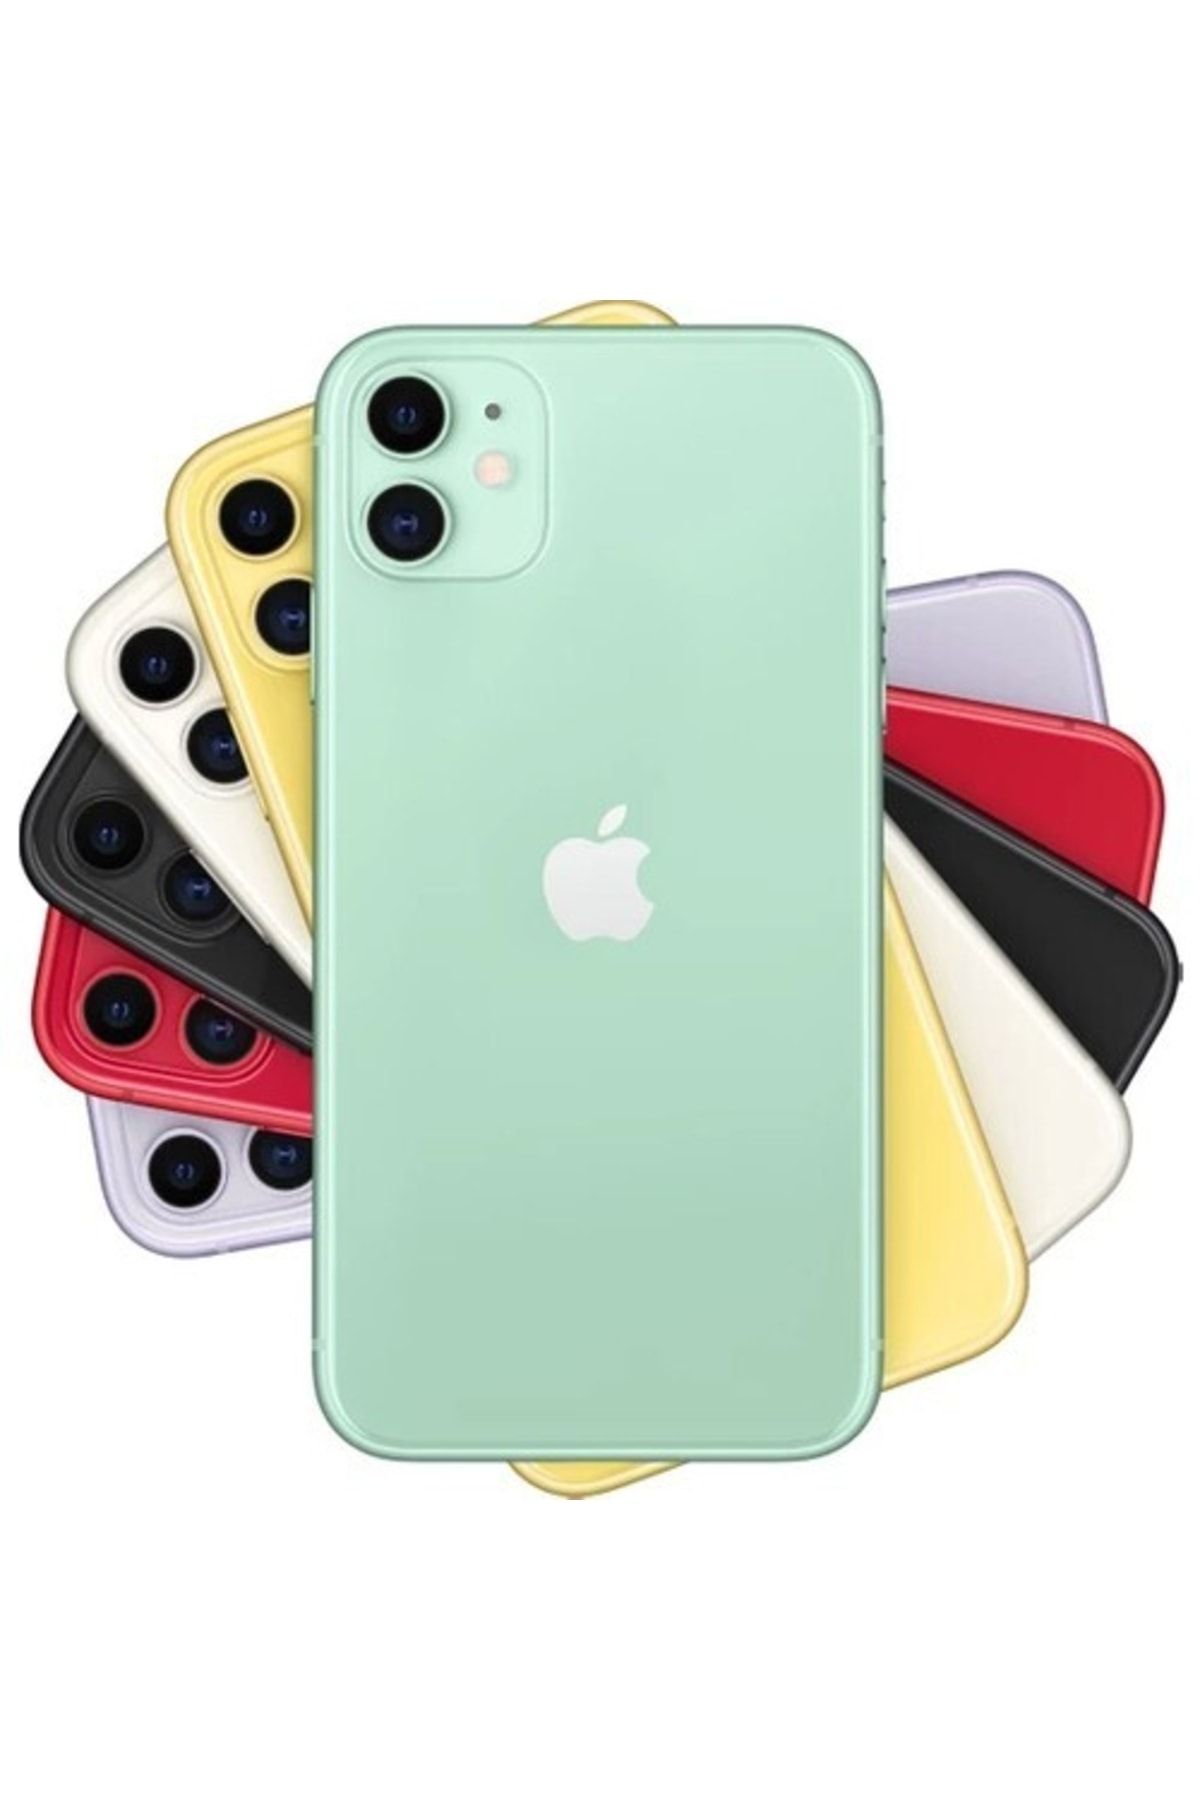 Apple Yenilenmiş iPhone 11 Green 64 GB